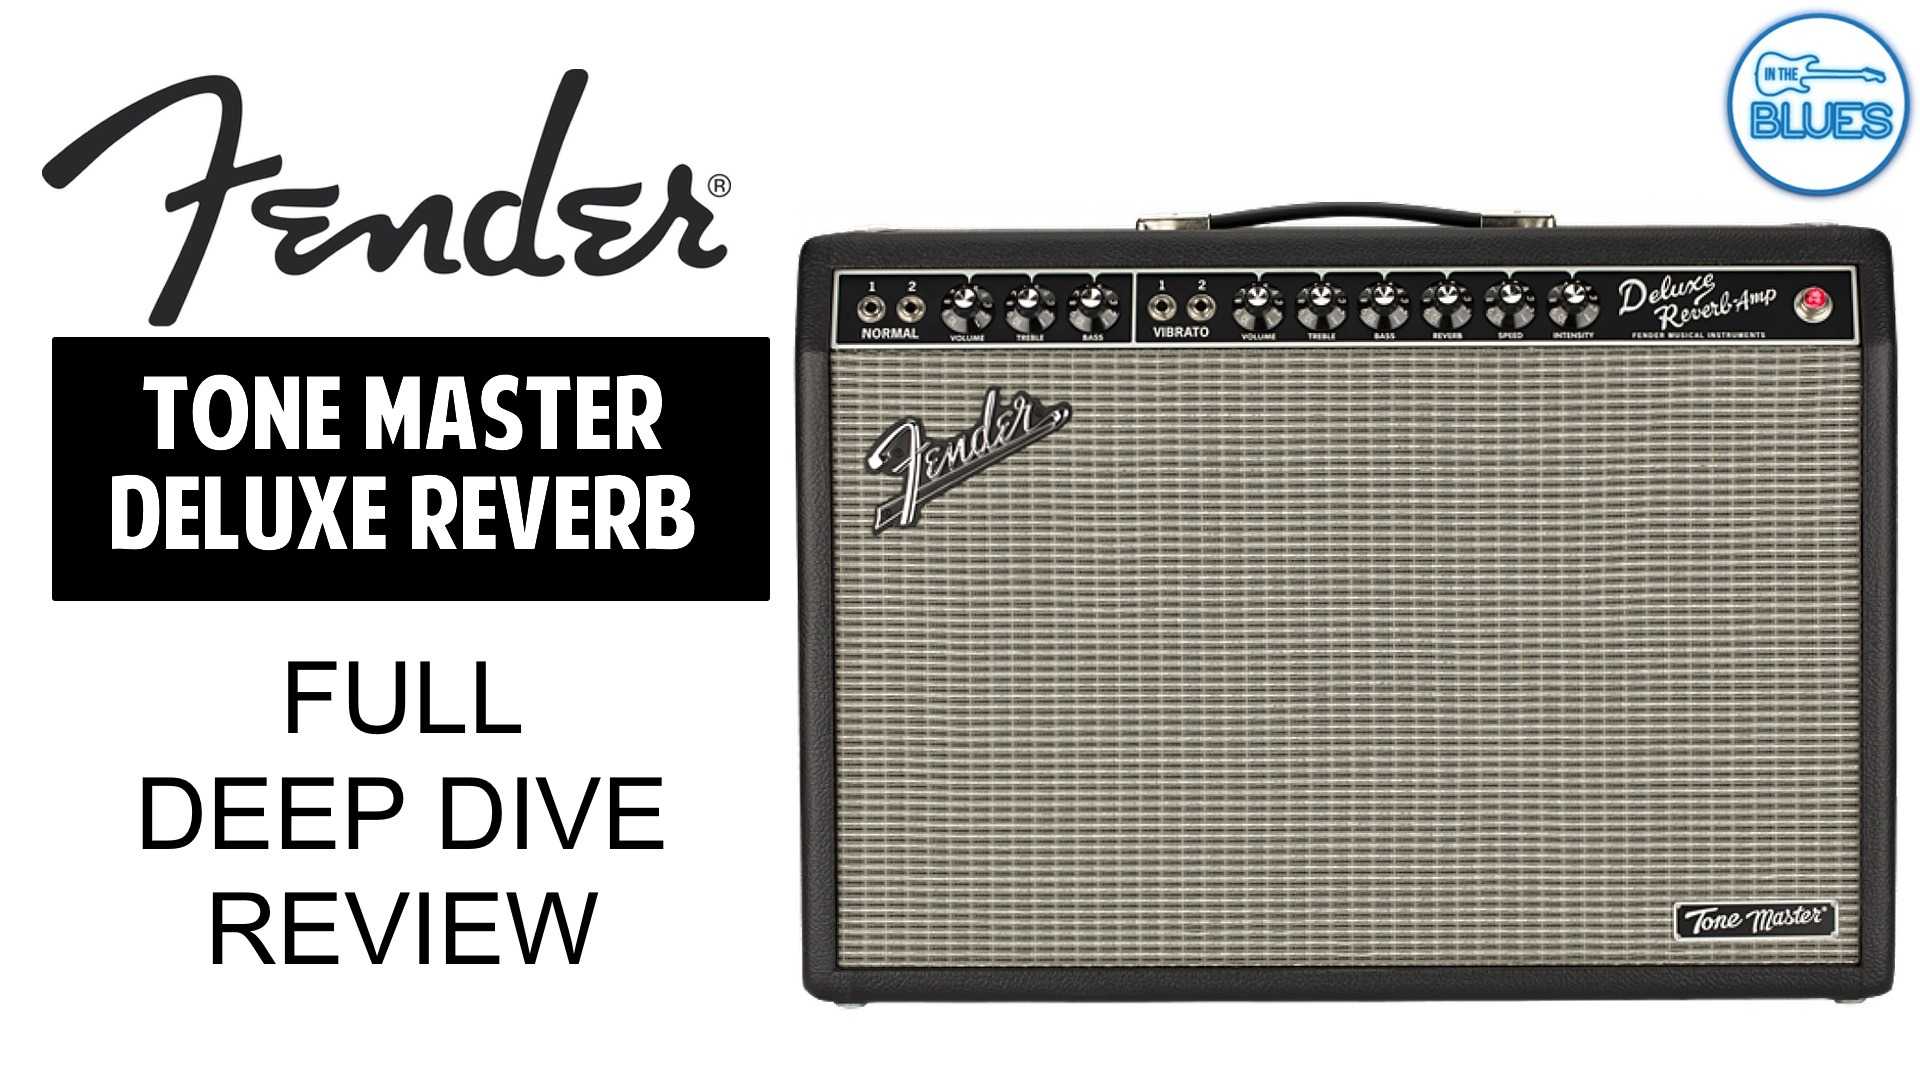 Tone master. Fender гитарный усилитель Tone Master Deluxe Reverb. Fender Tone Master Deluxe Reverb характеристики. Fender Tone программа. Схема Fender Tone Master Deluxe Reverb.